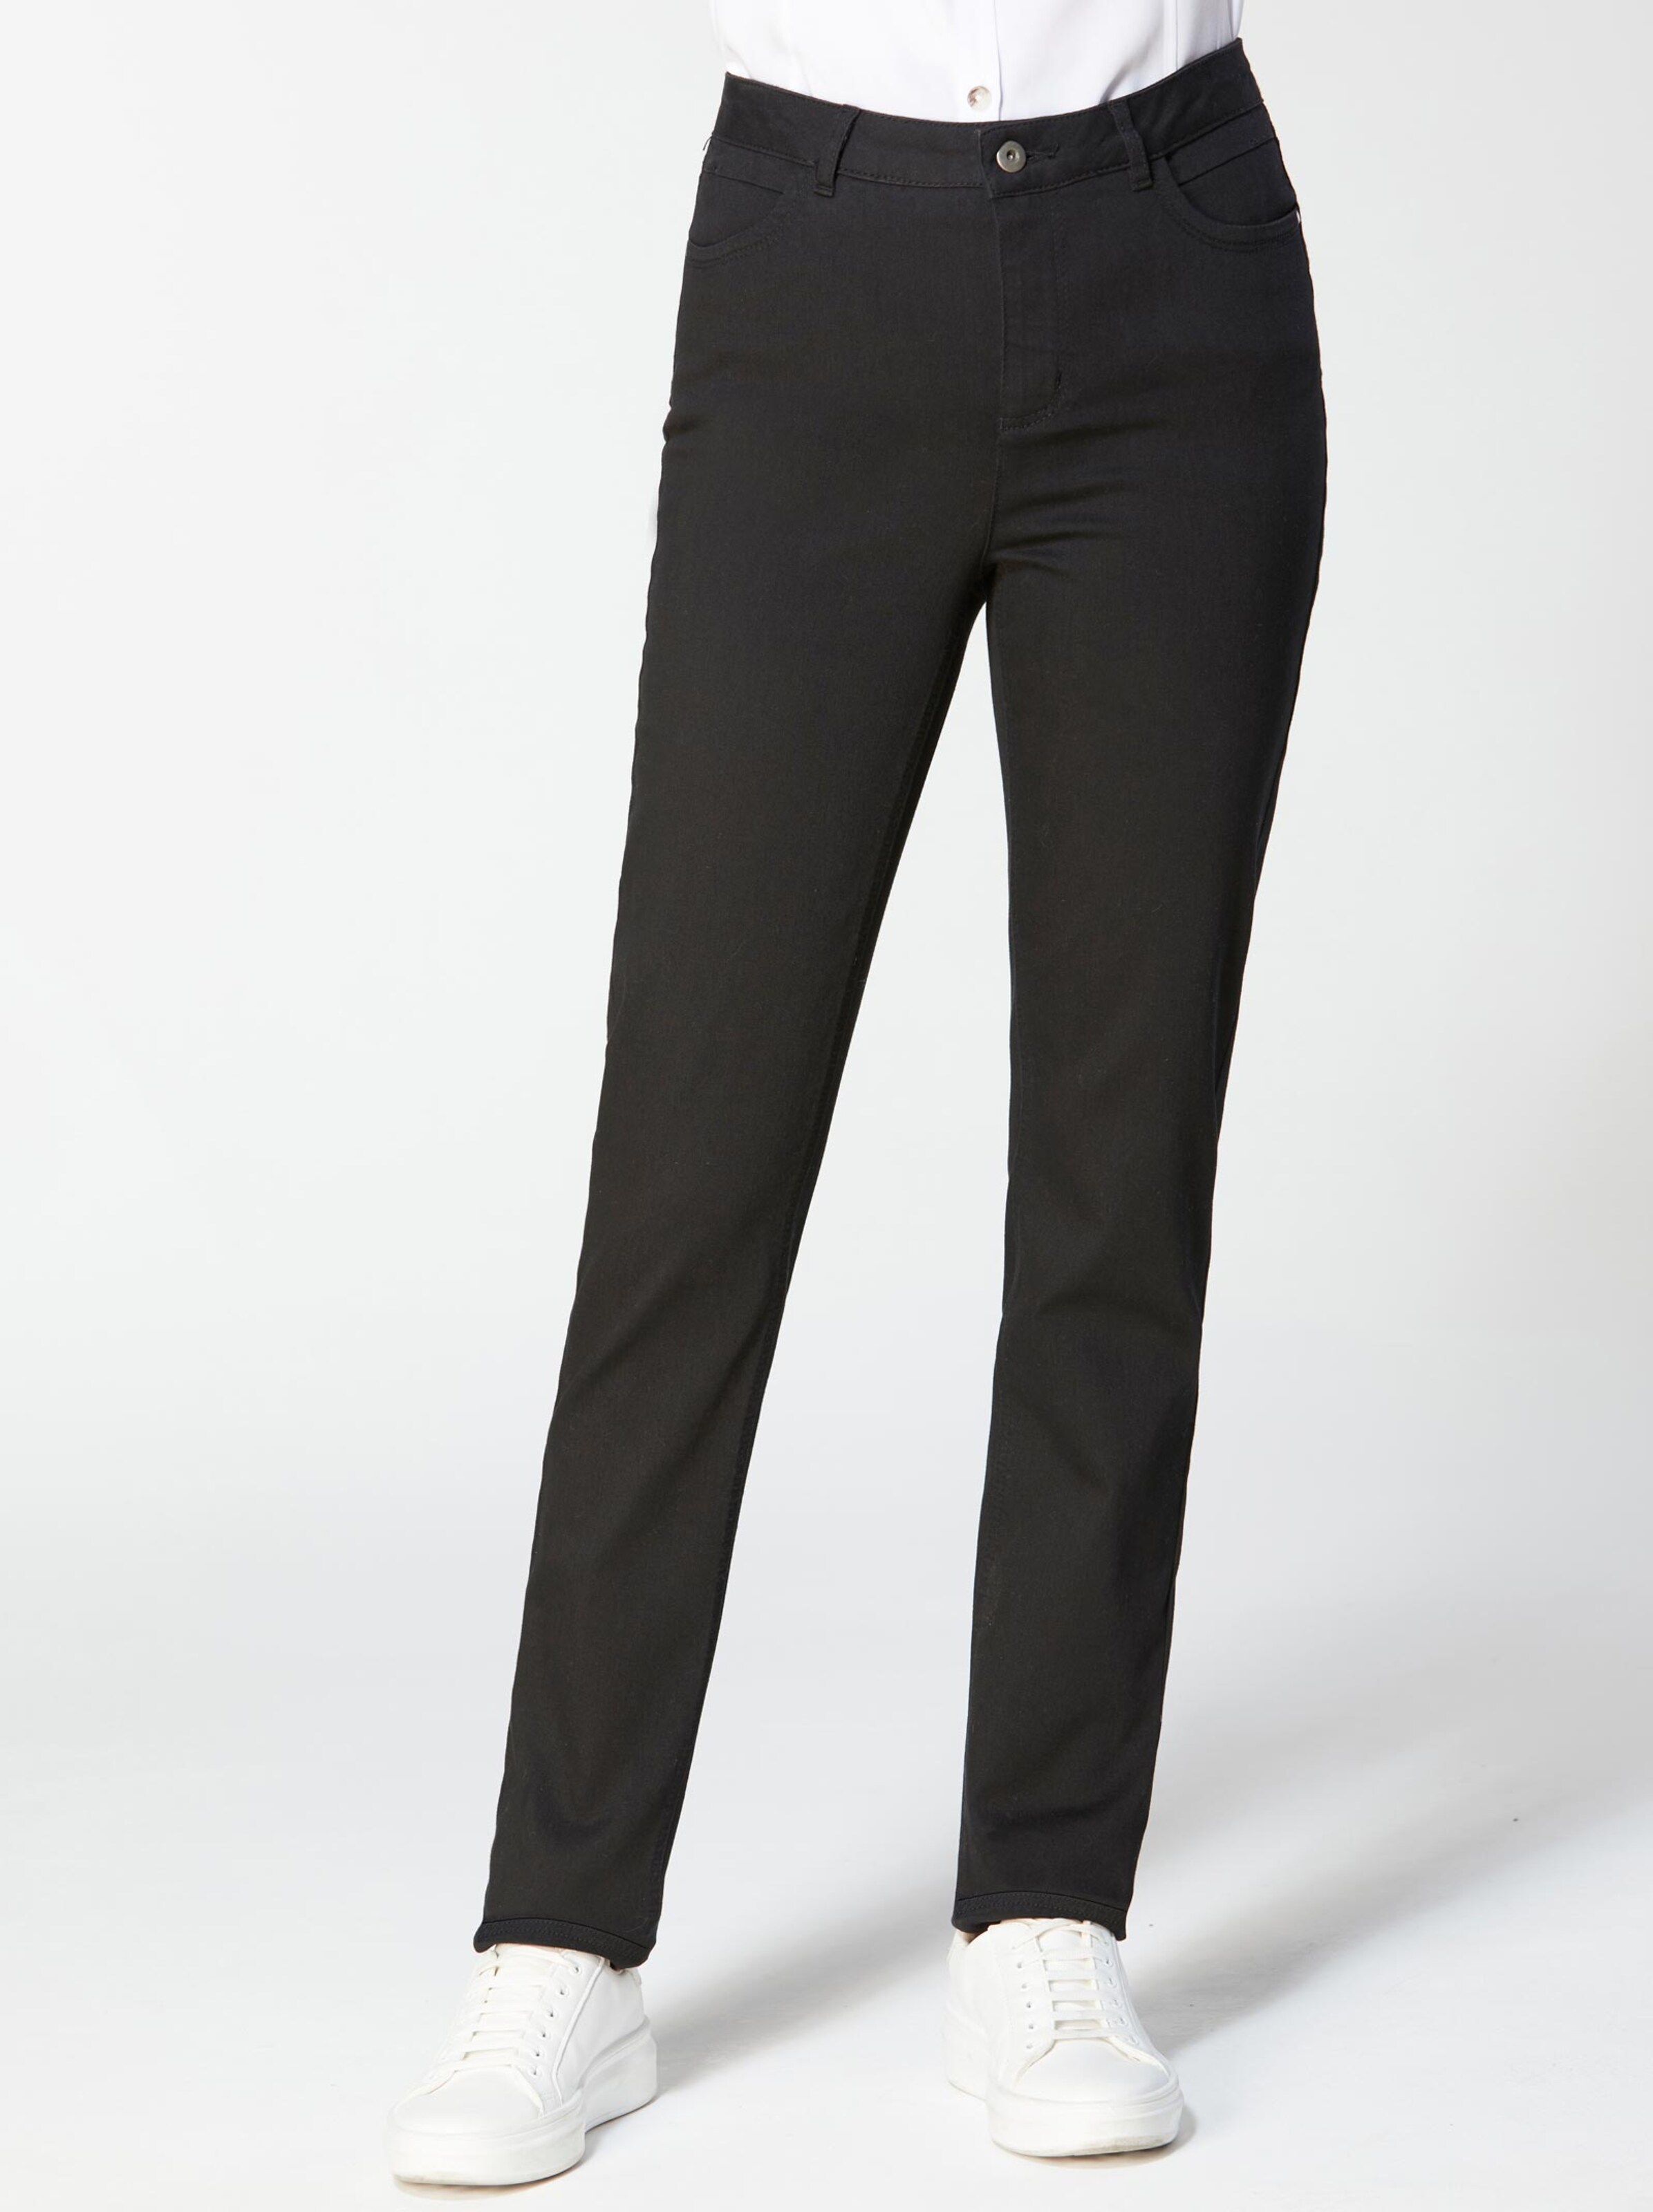 Damenmode Jeans Creation L Premium Edel-Jeans in black-denim 